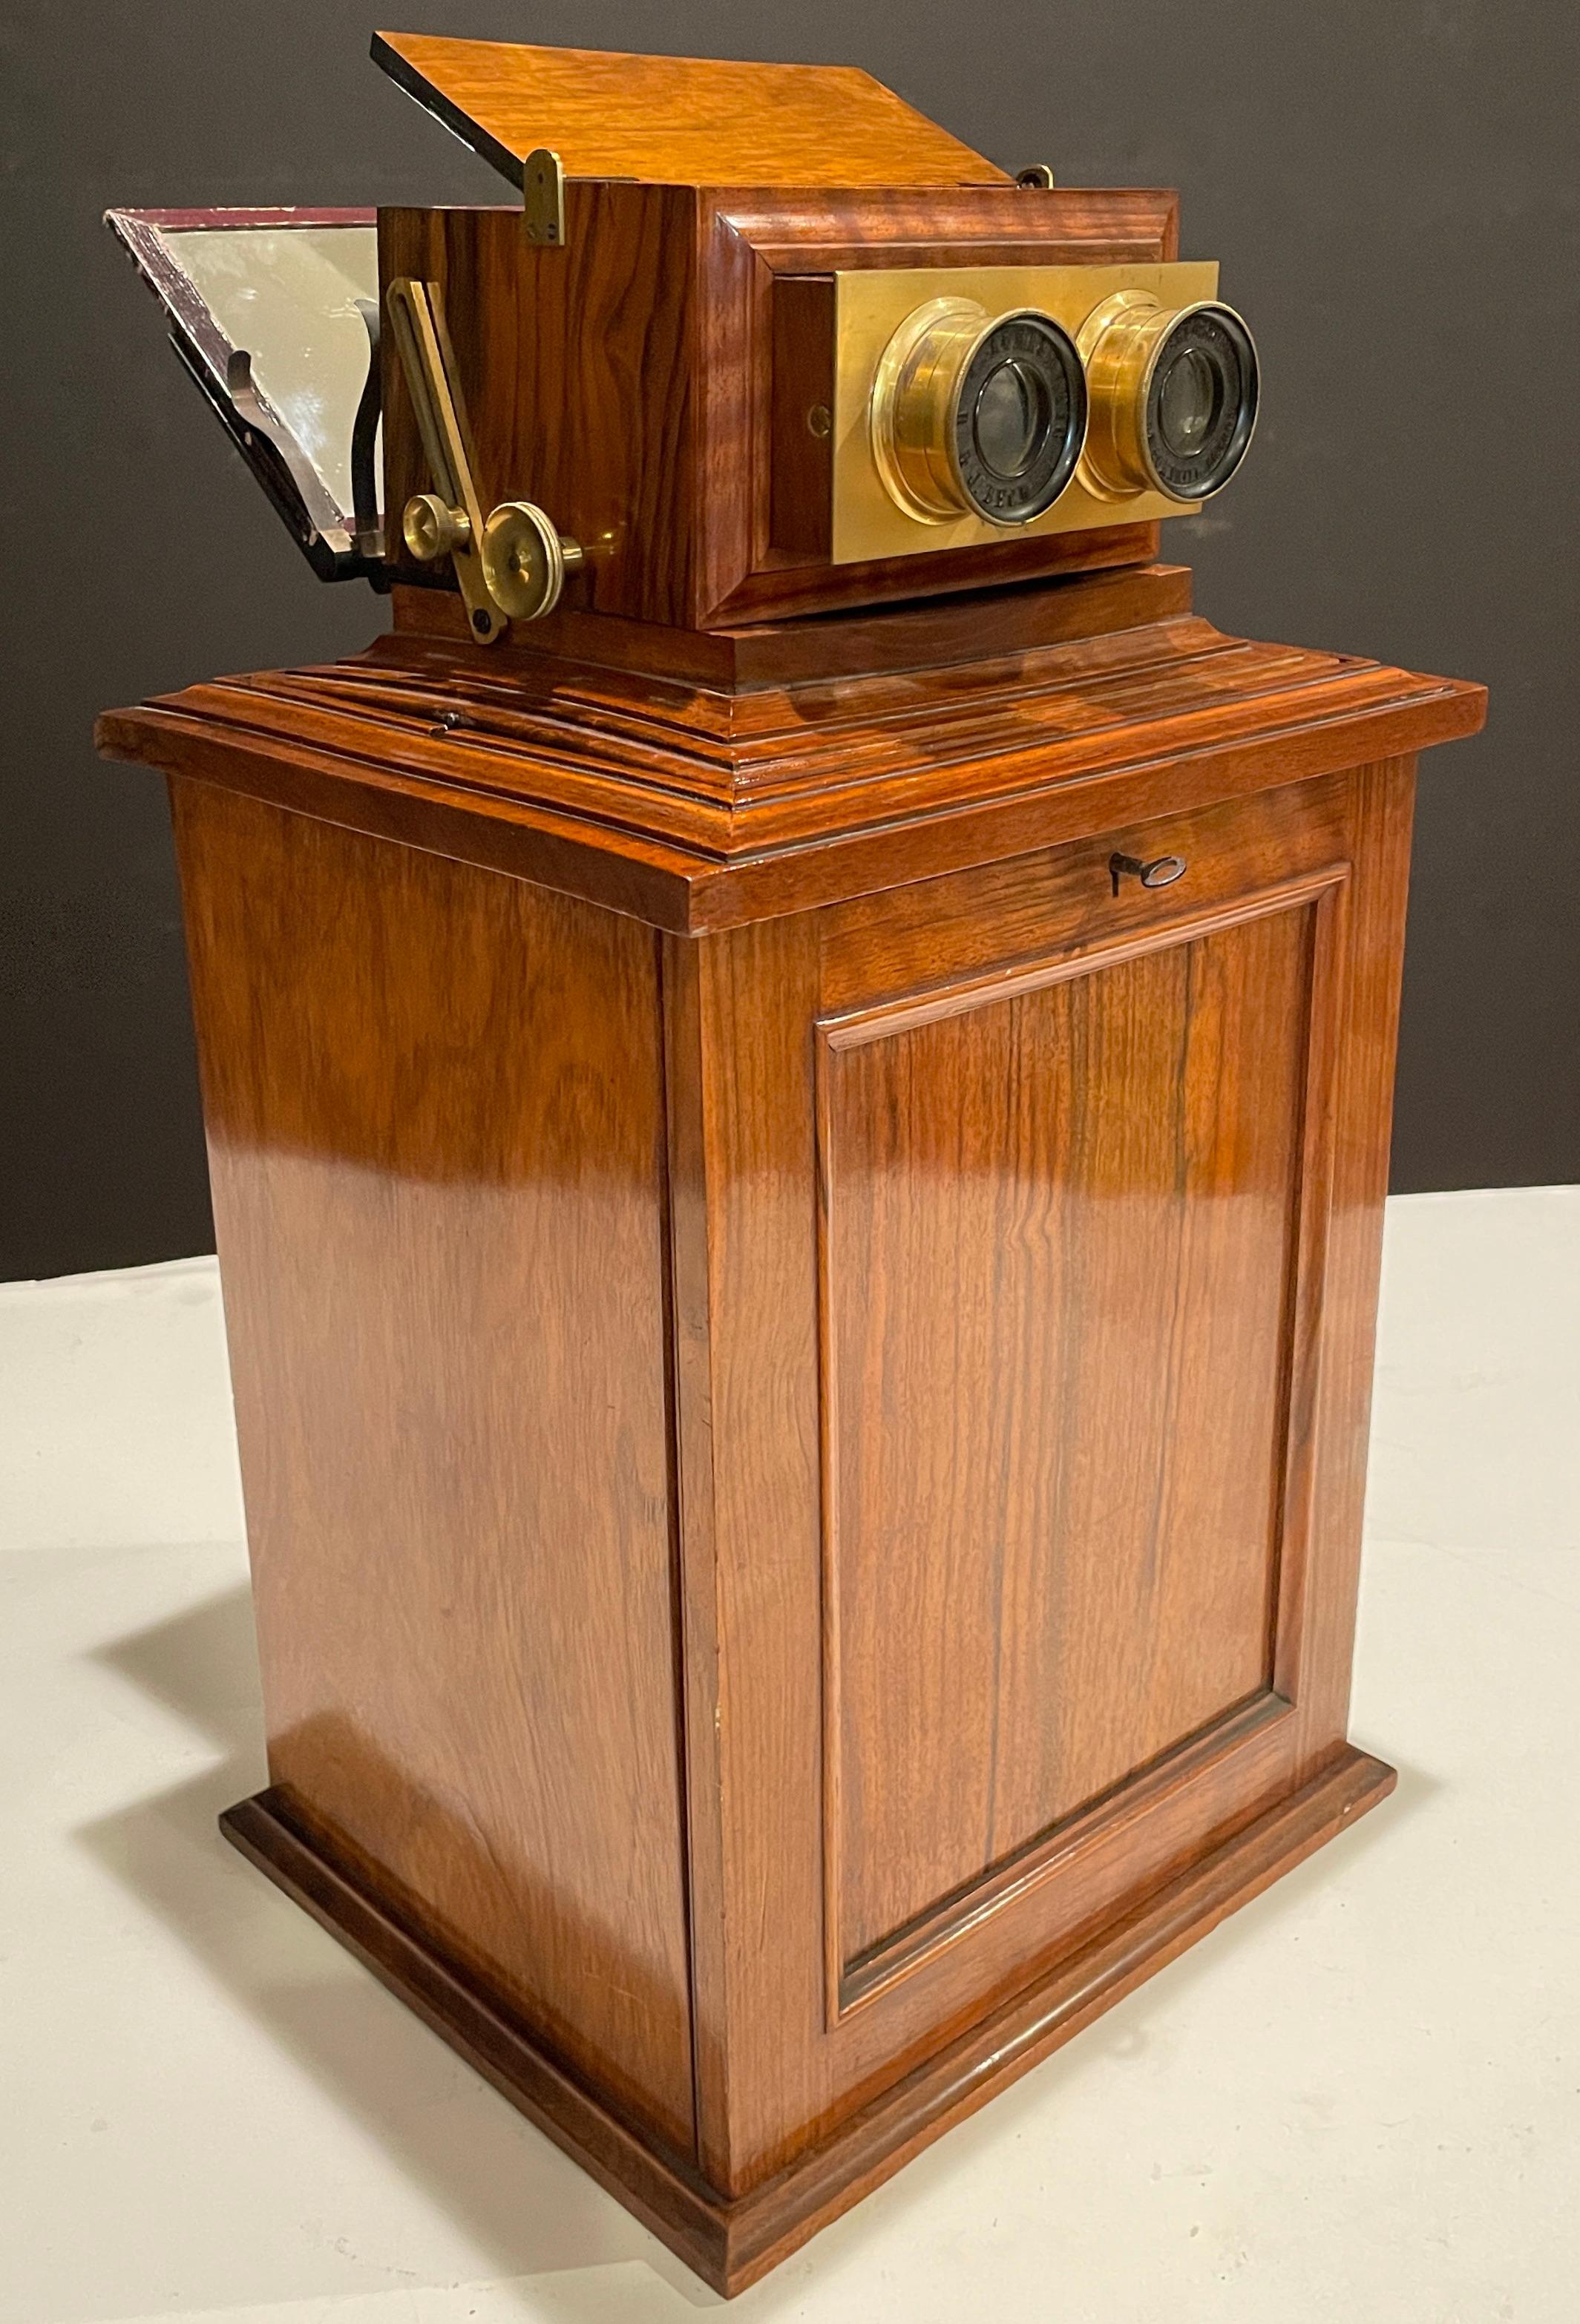 R. & J. Beck Stereoscope aus dem 19. Jahrhundert (Viktorianisch) im Angebot